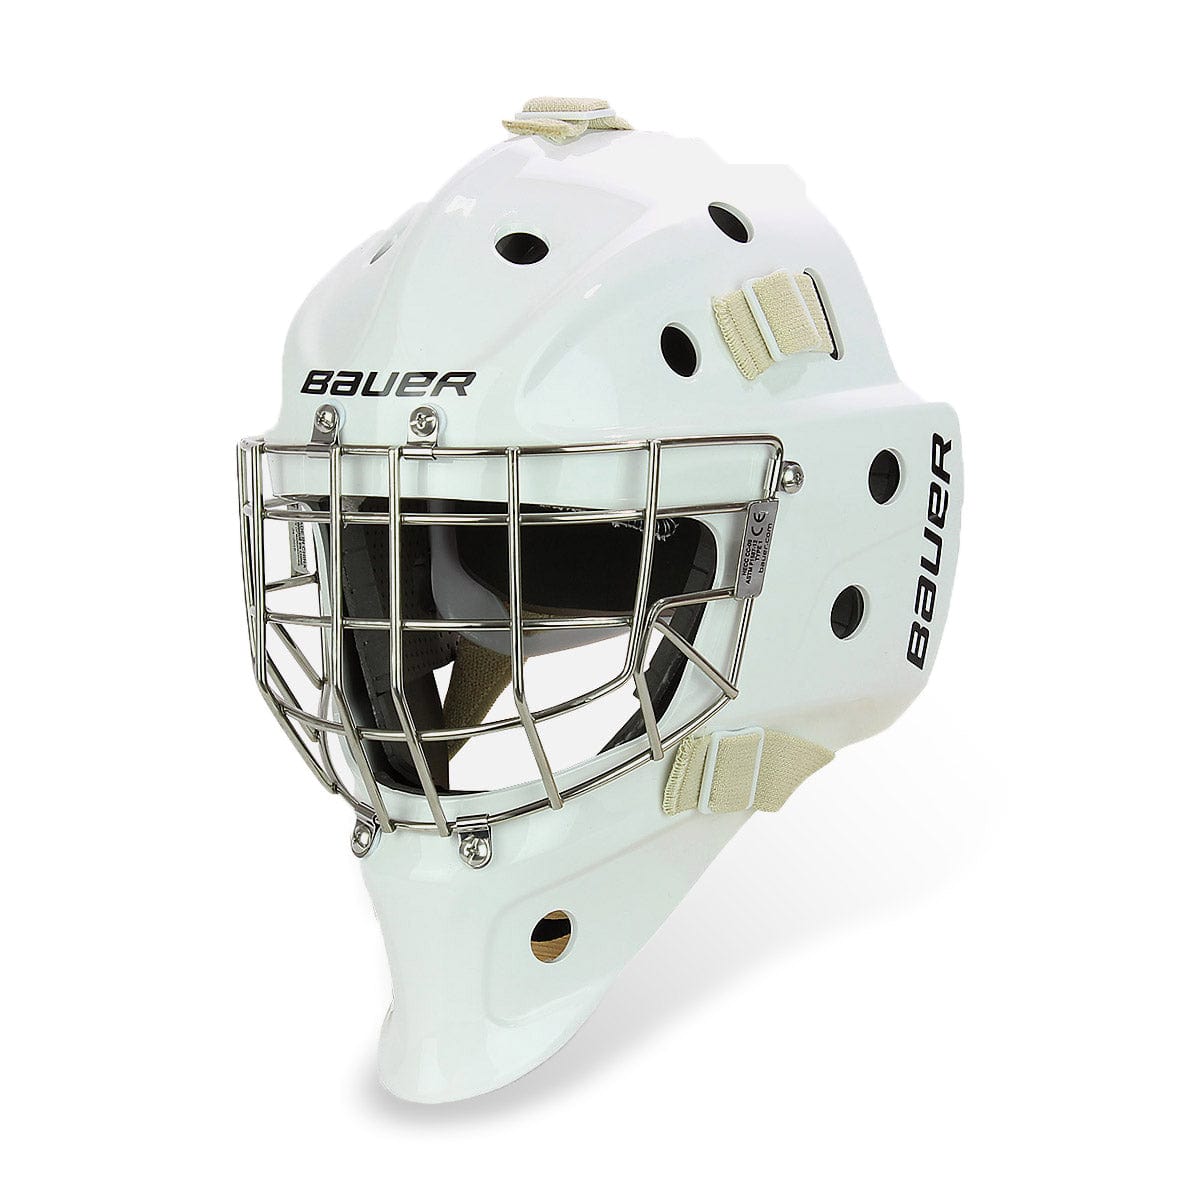 Bauer Profile 940X Senior Goalie Mask - White - The Hockey Shop Source For Sports